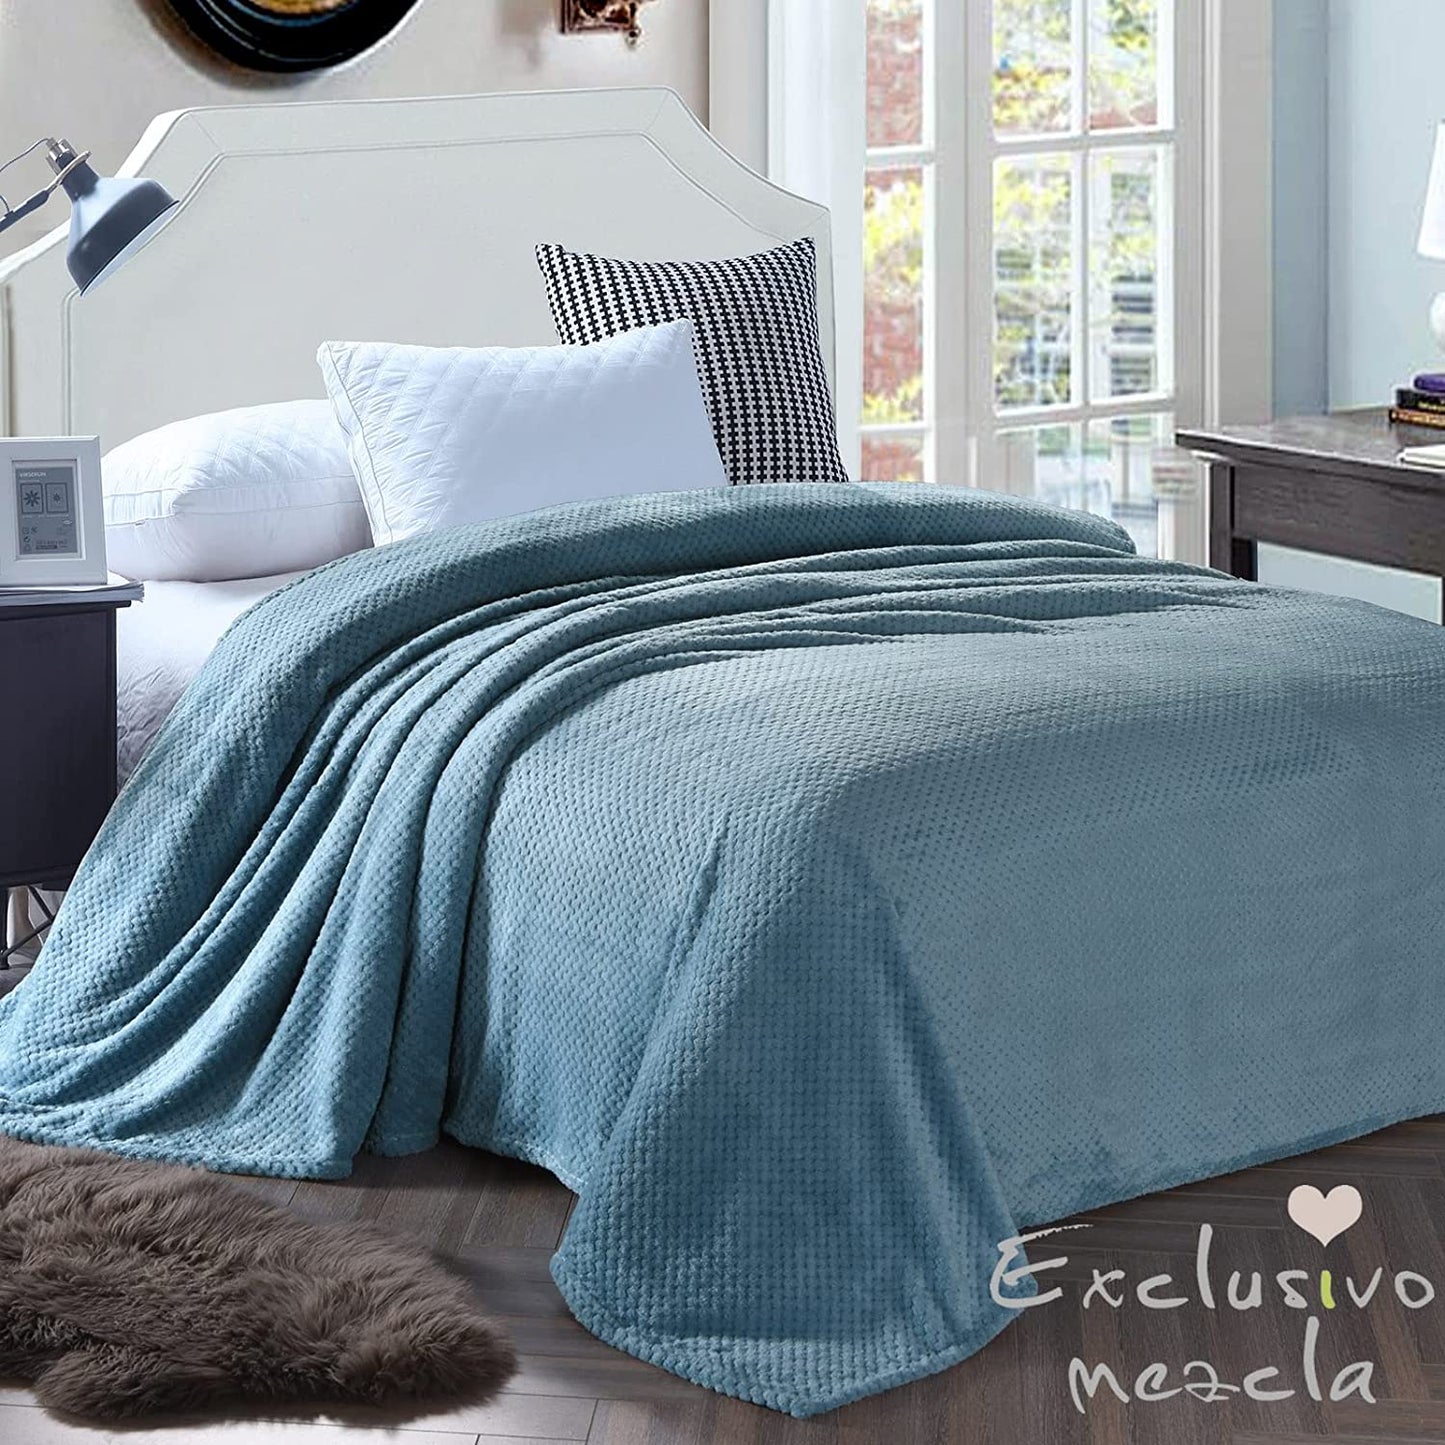 Exclusivo Mezcla Waffle Textured Soft Fleece Blanket,Twin Size Bed Blanket (Slate Blue,90x66 inch)-Cozy,Warm and Lightweight